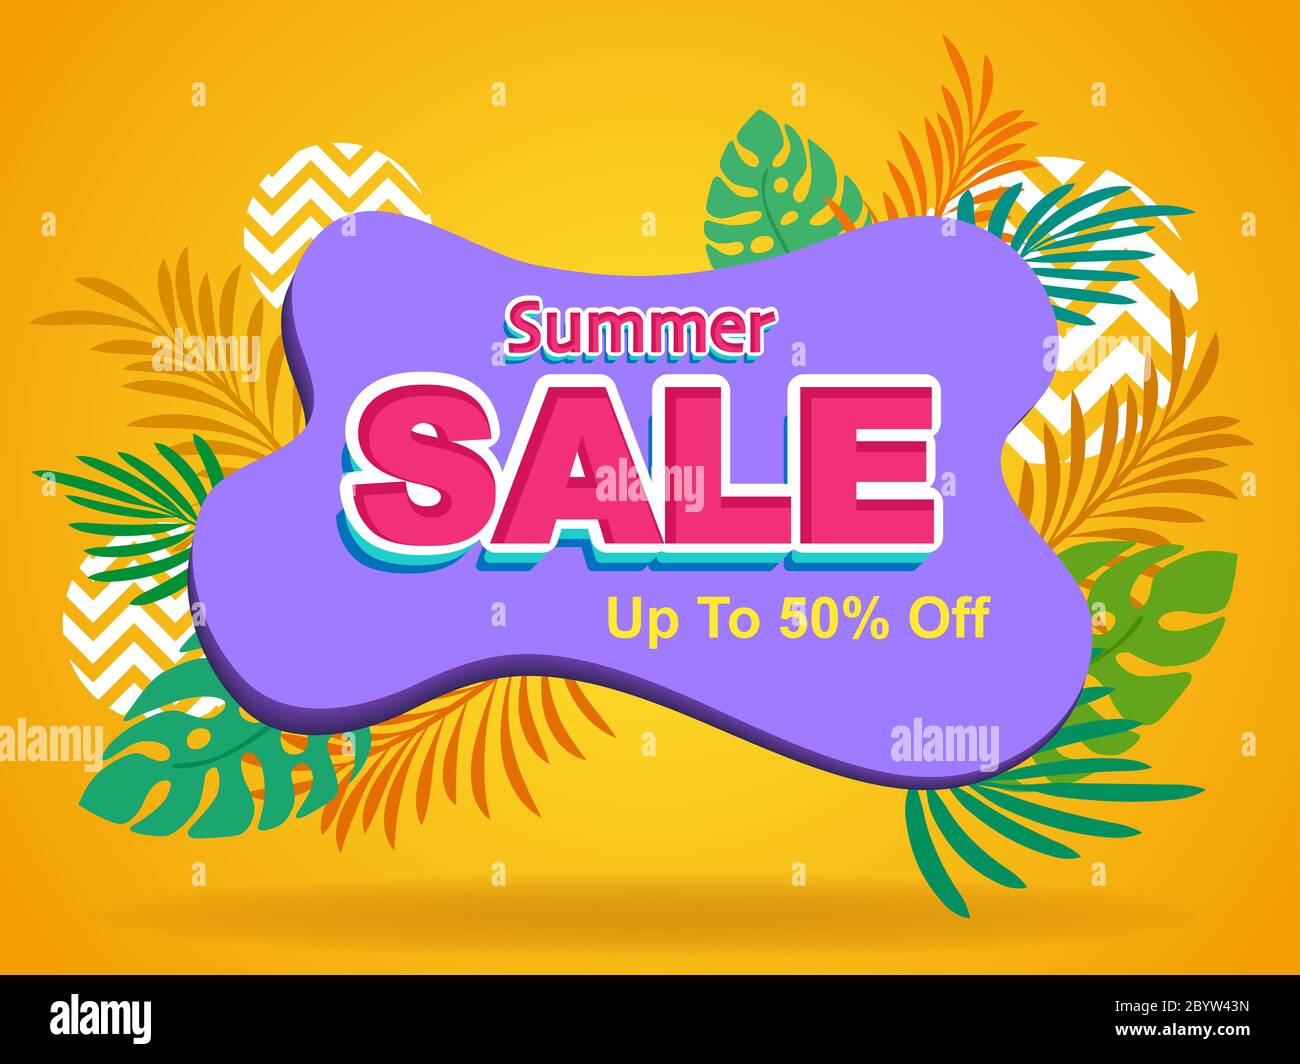 Summer time sale banner design Stock Photo